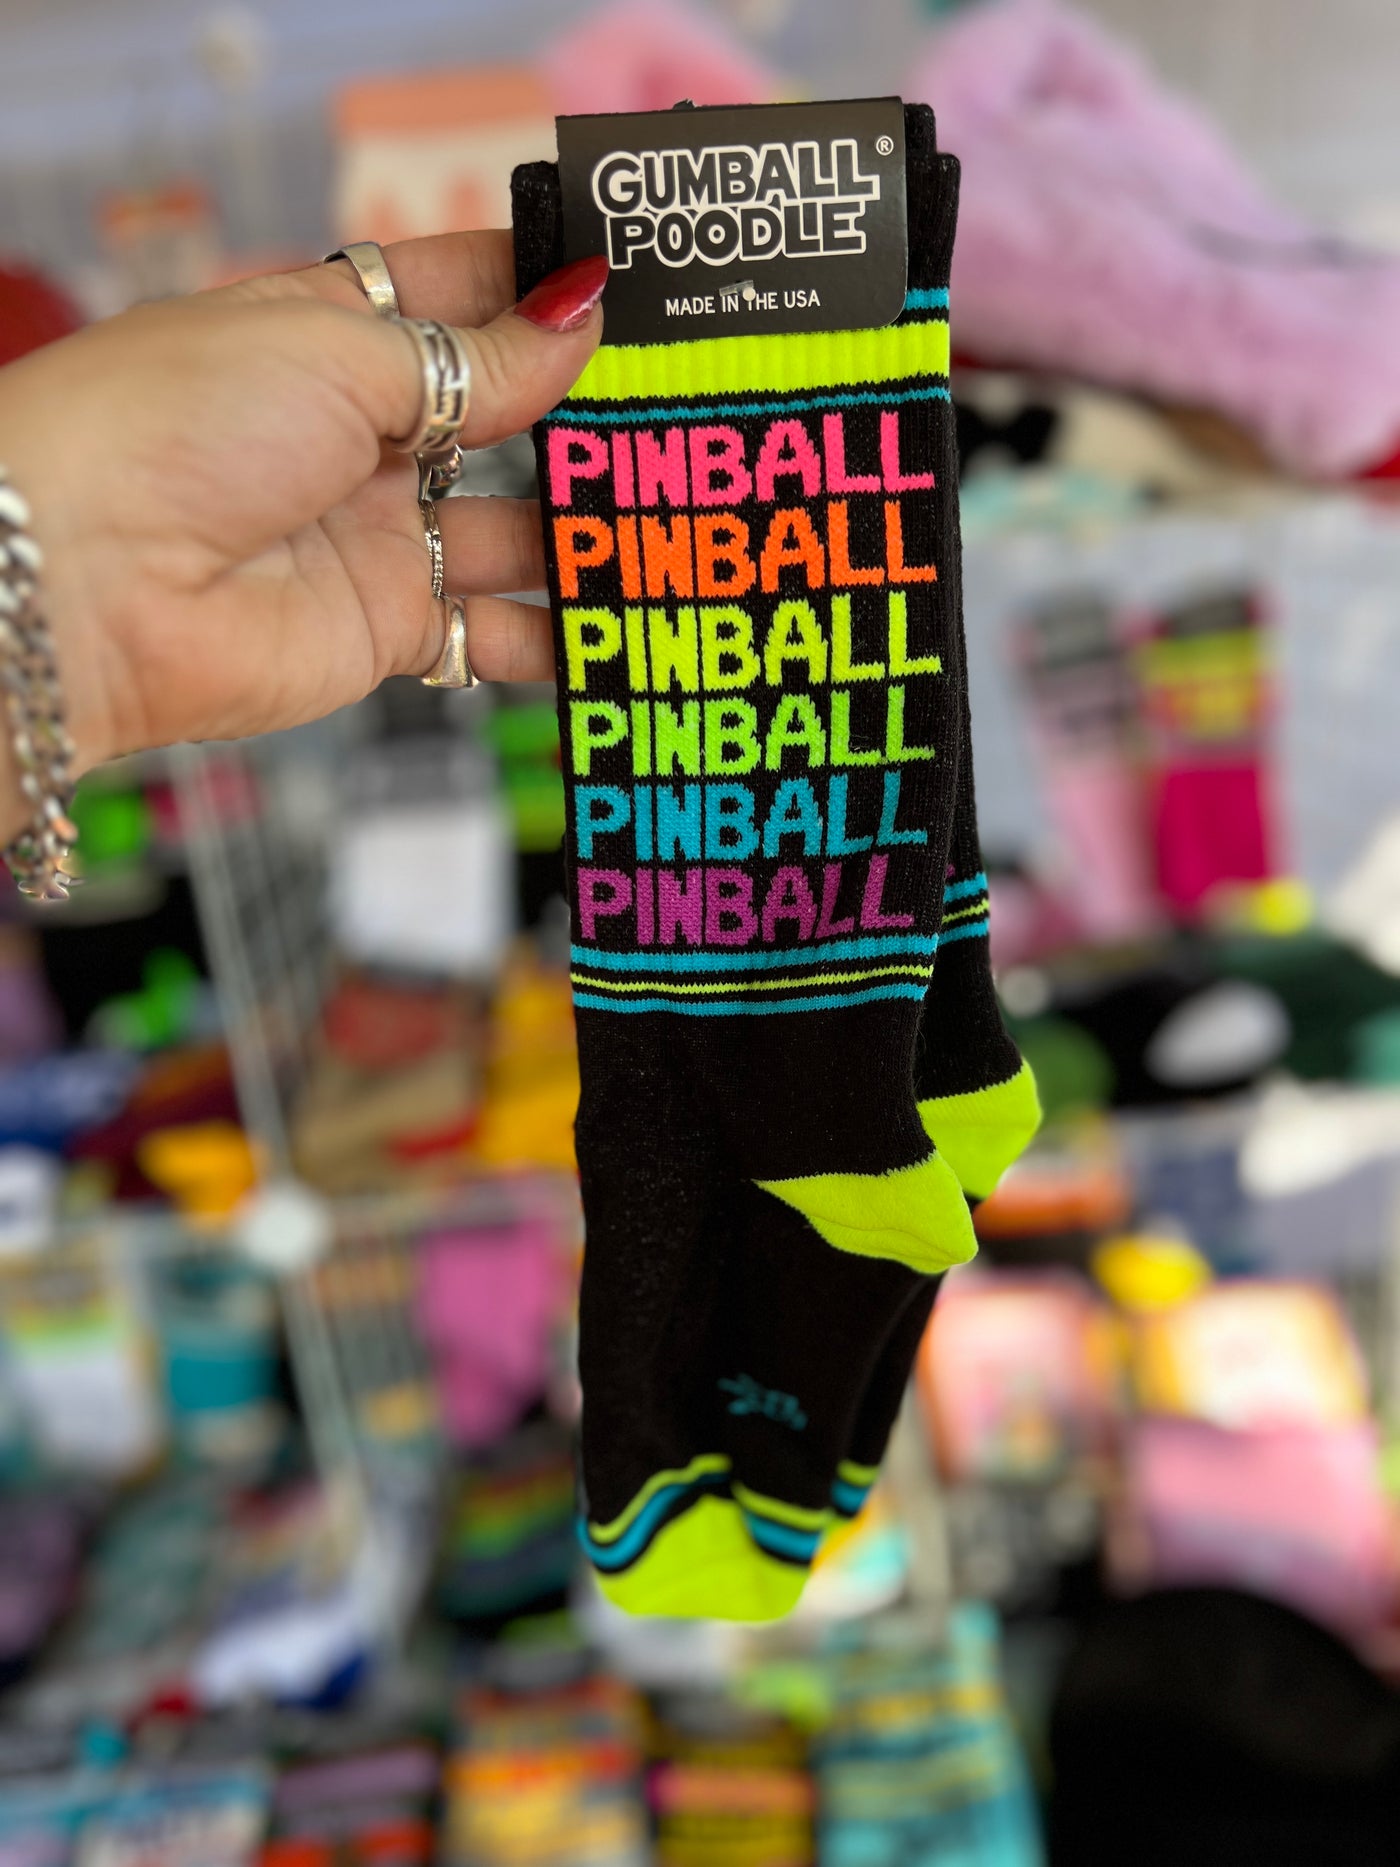 PINBALL - NEON RAINBOW Gym Crew Socks